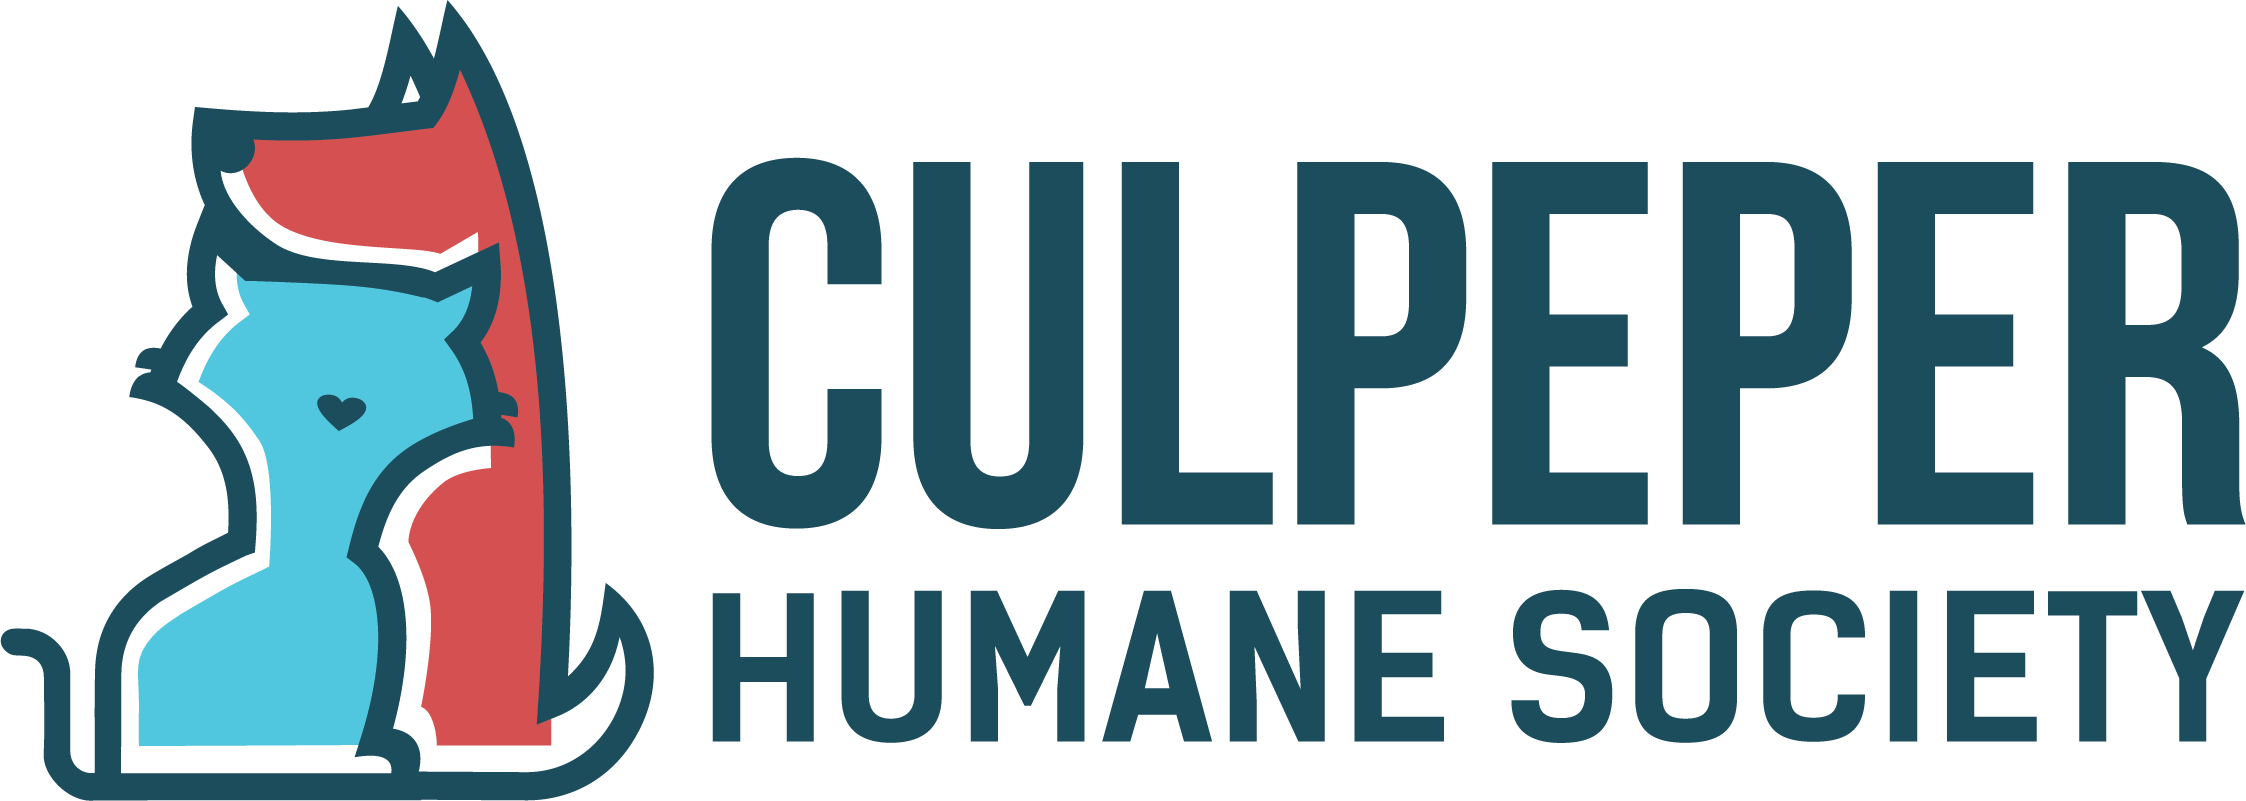 Culpeper Humane Society